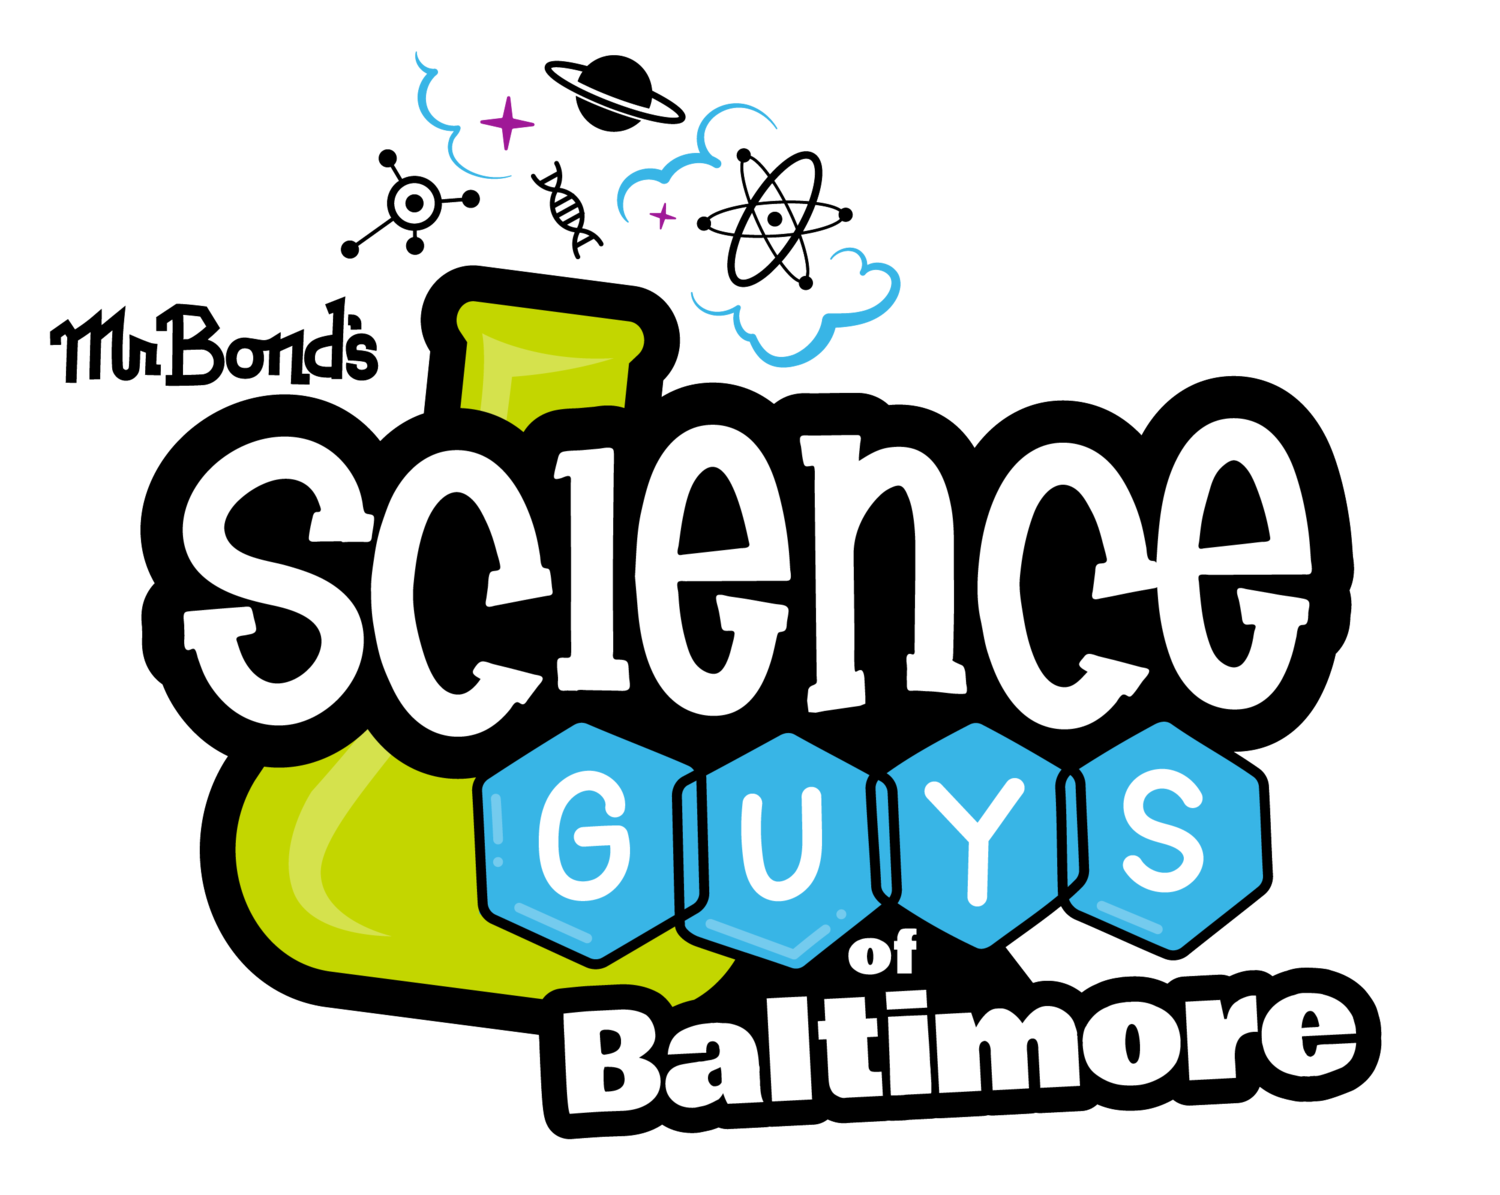 Science Guys of Baltimore